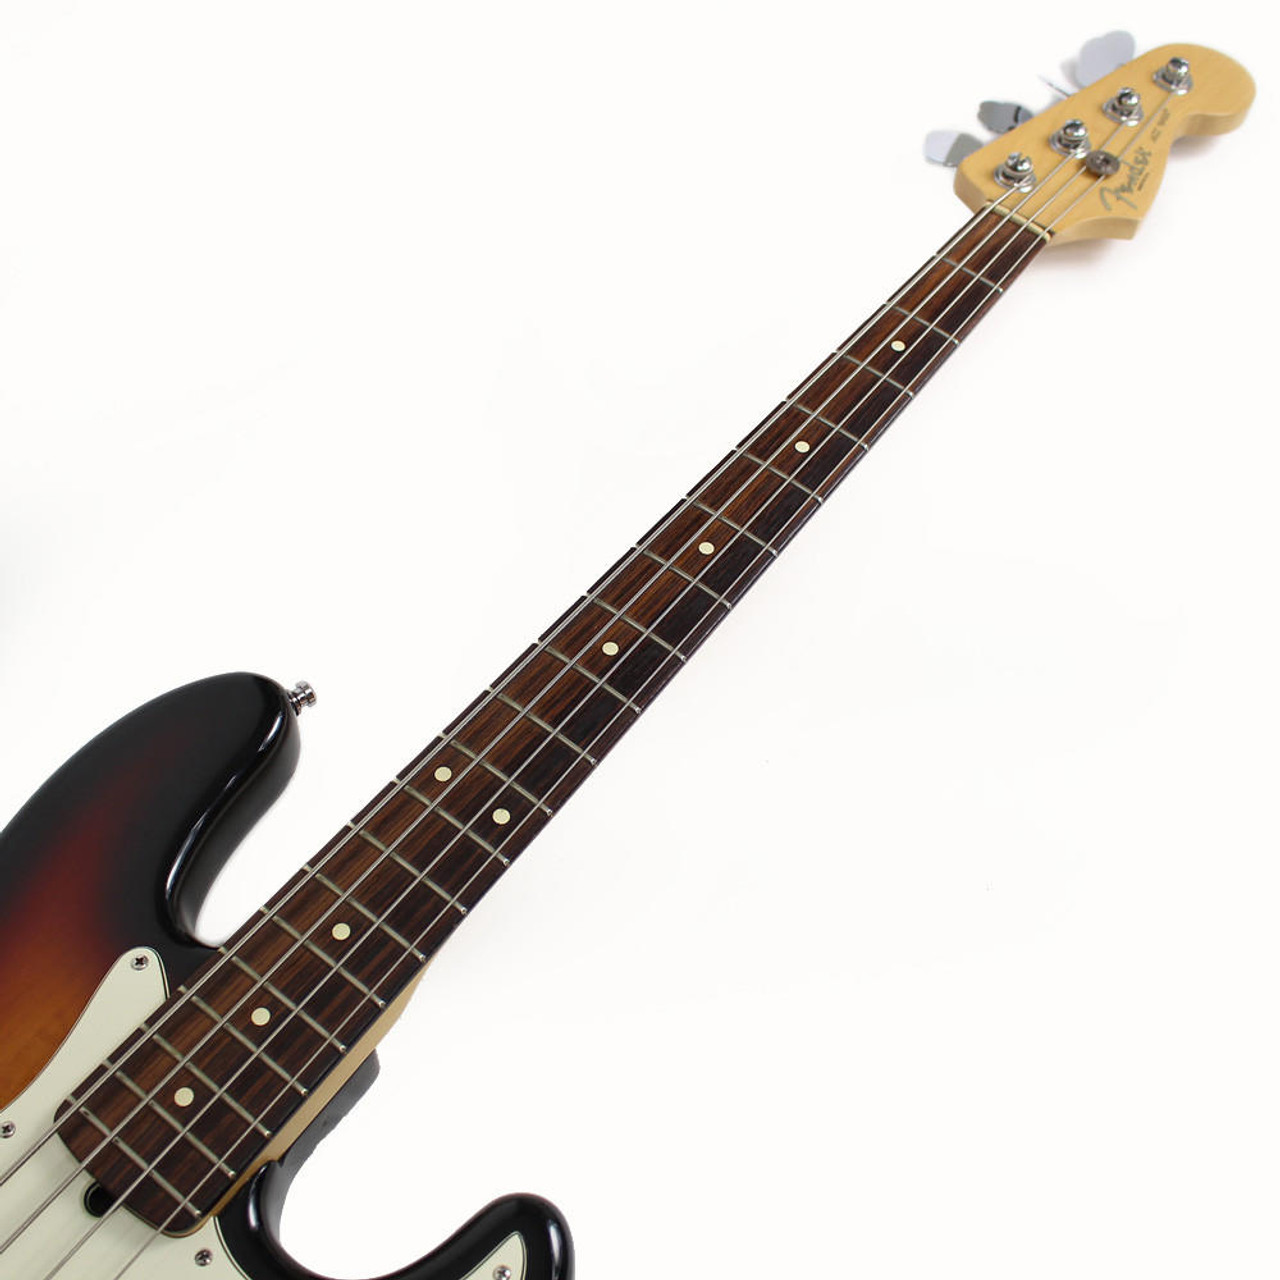 2001 Fender American Standard Jazz Bass in 3 Tone Sunburst